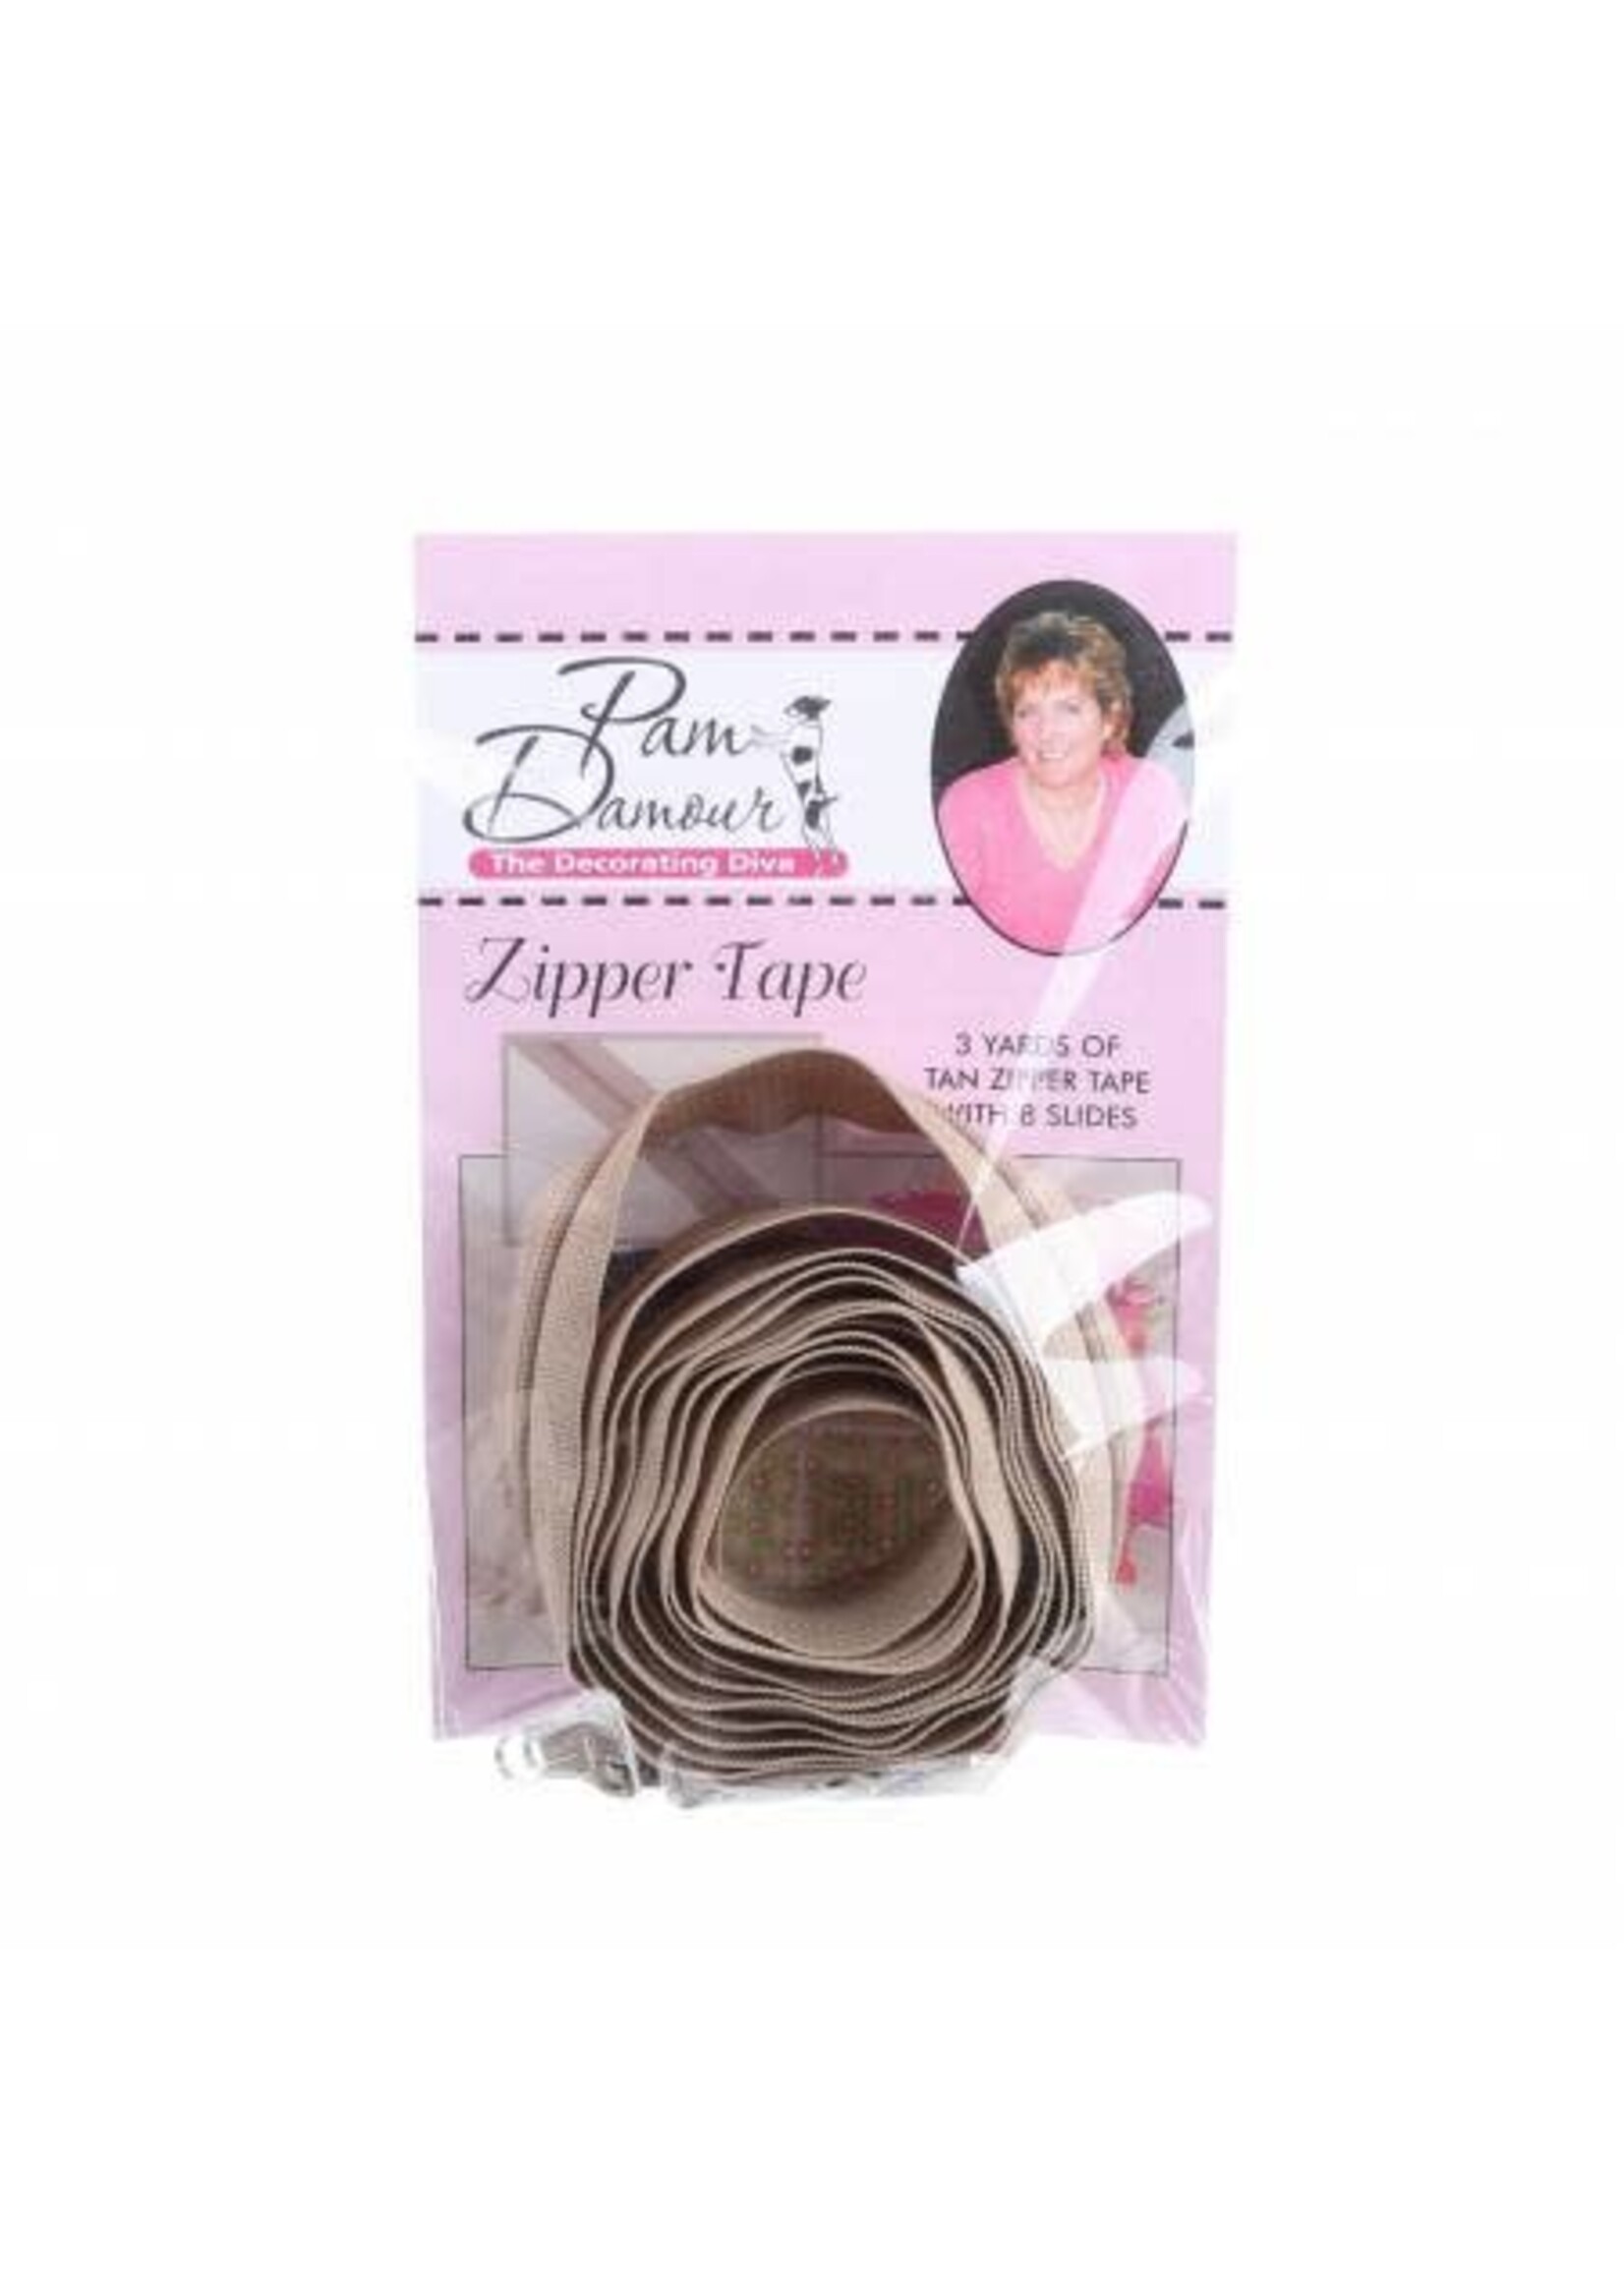 Pam Damour Zipper Tape - Tan - 3 Yards - ENR/T